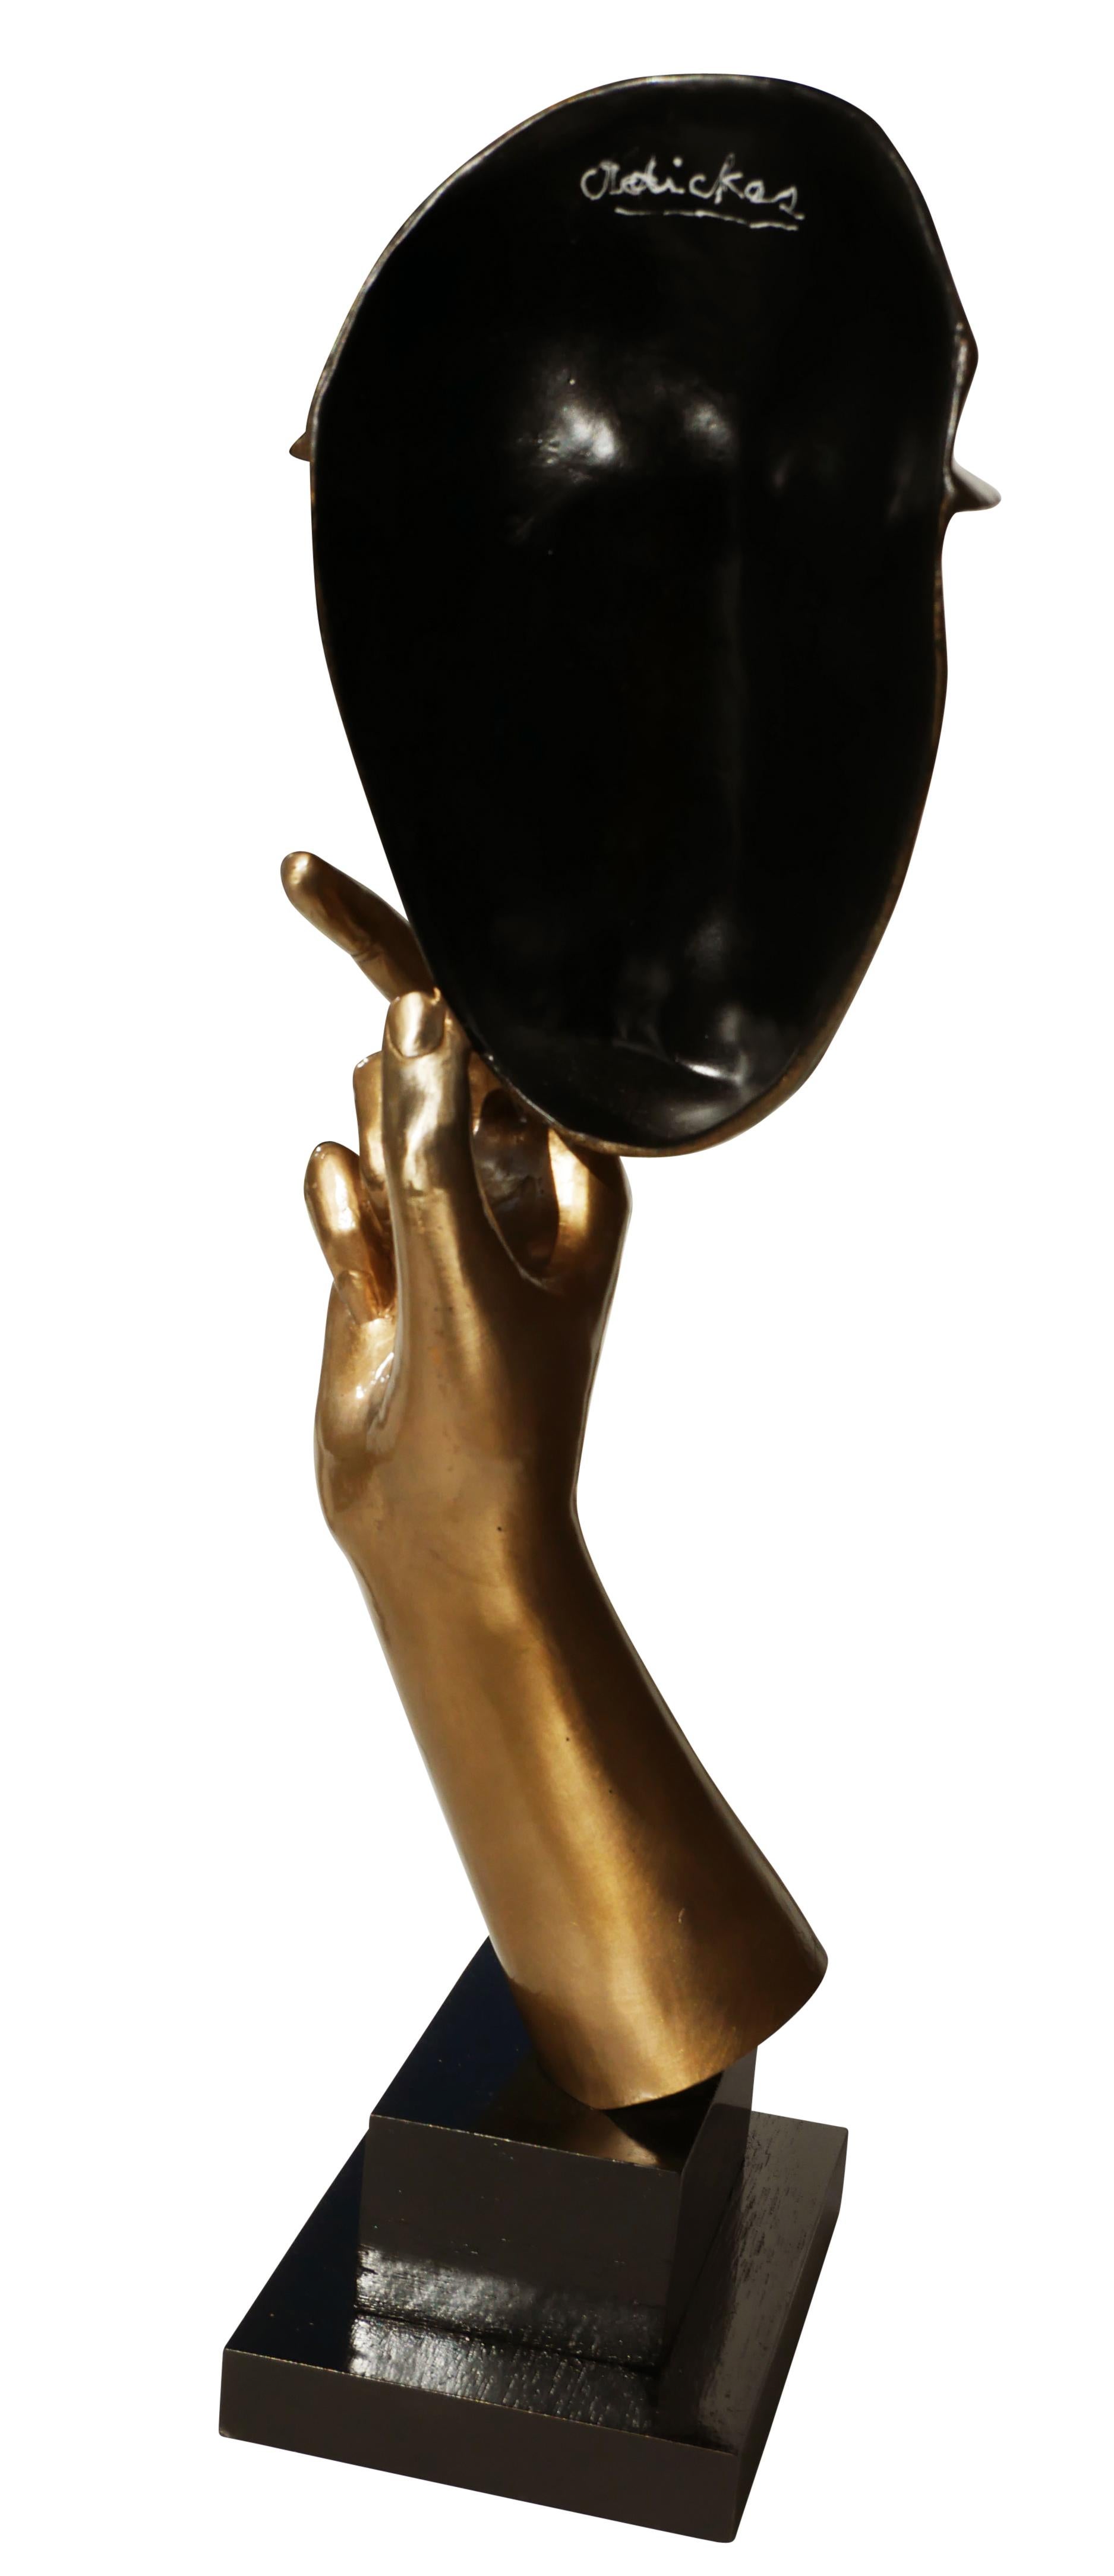 Face féminine moderniste abstraite avec bras sculpté en bronze - Marron Abstract Sculpture par David Adickes